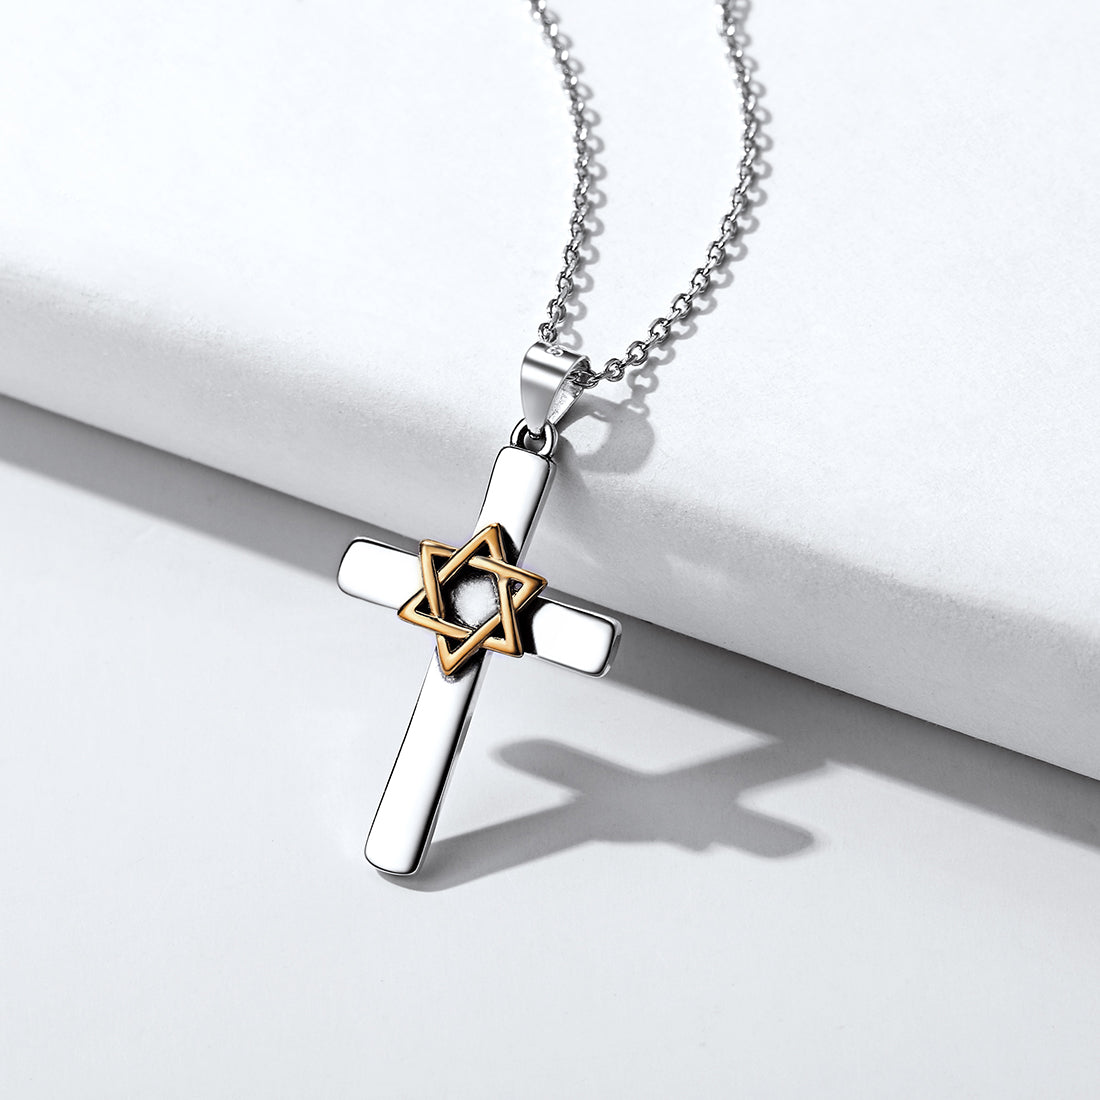 FaithHeart Cross Star of David Sterling Silver Pendant Necklace FaithHeart